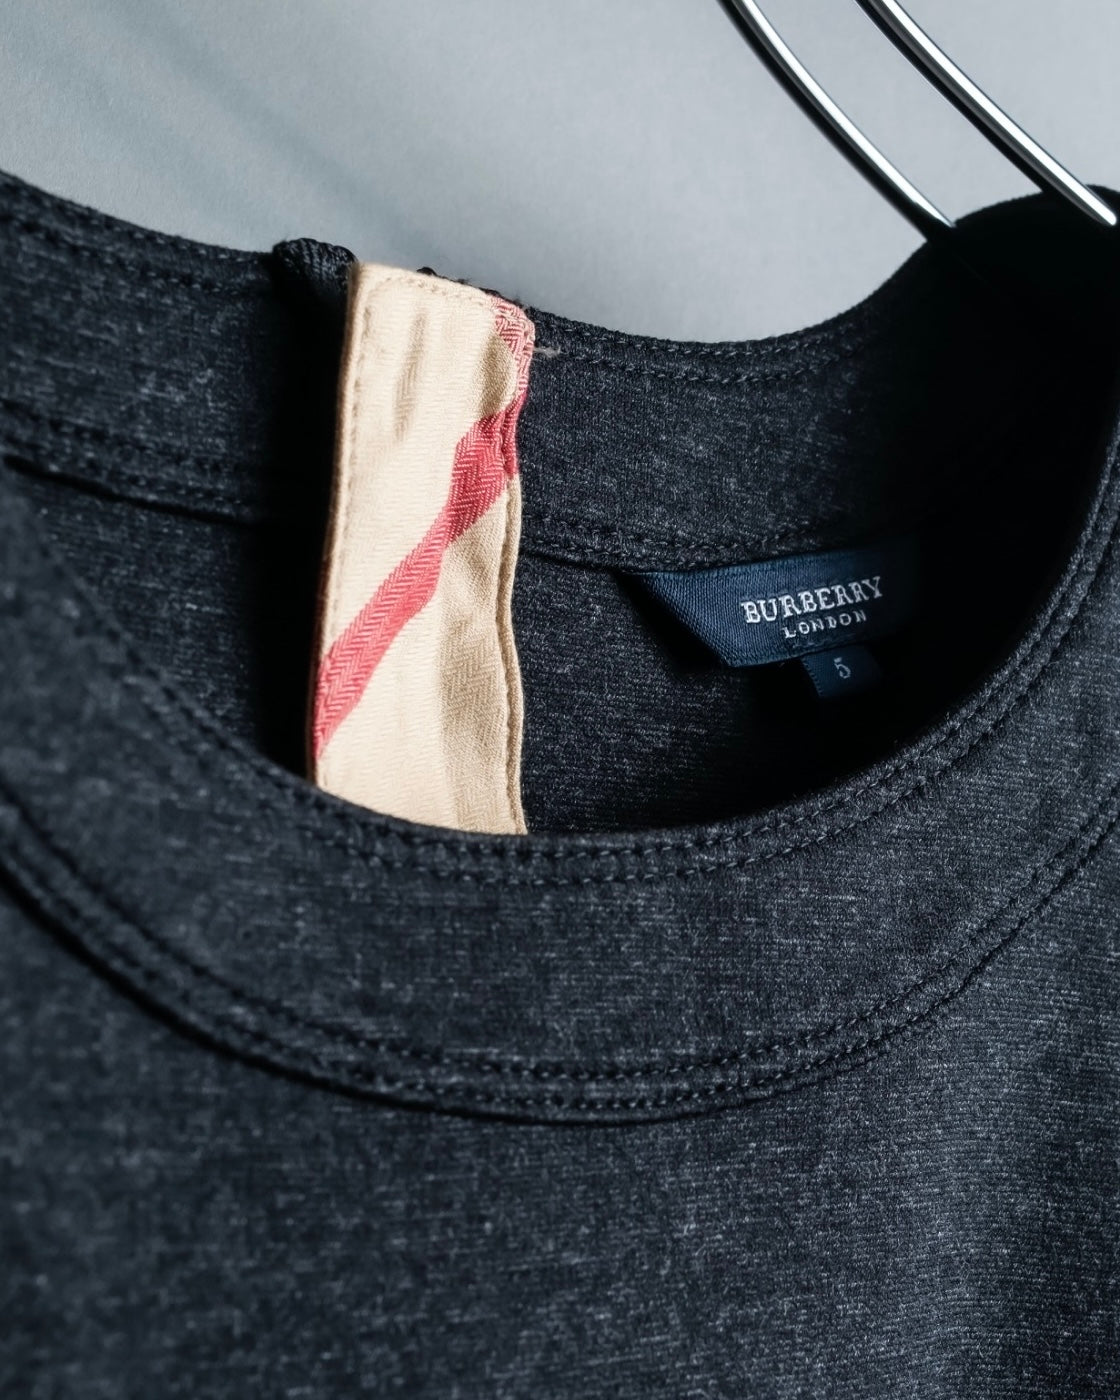 "Burberry london" Zip-up detail pocket T-shirt